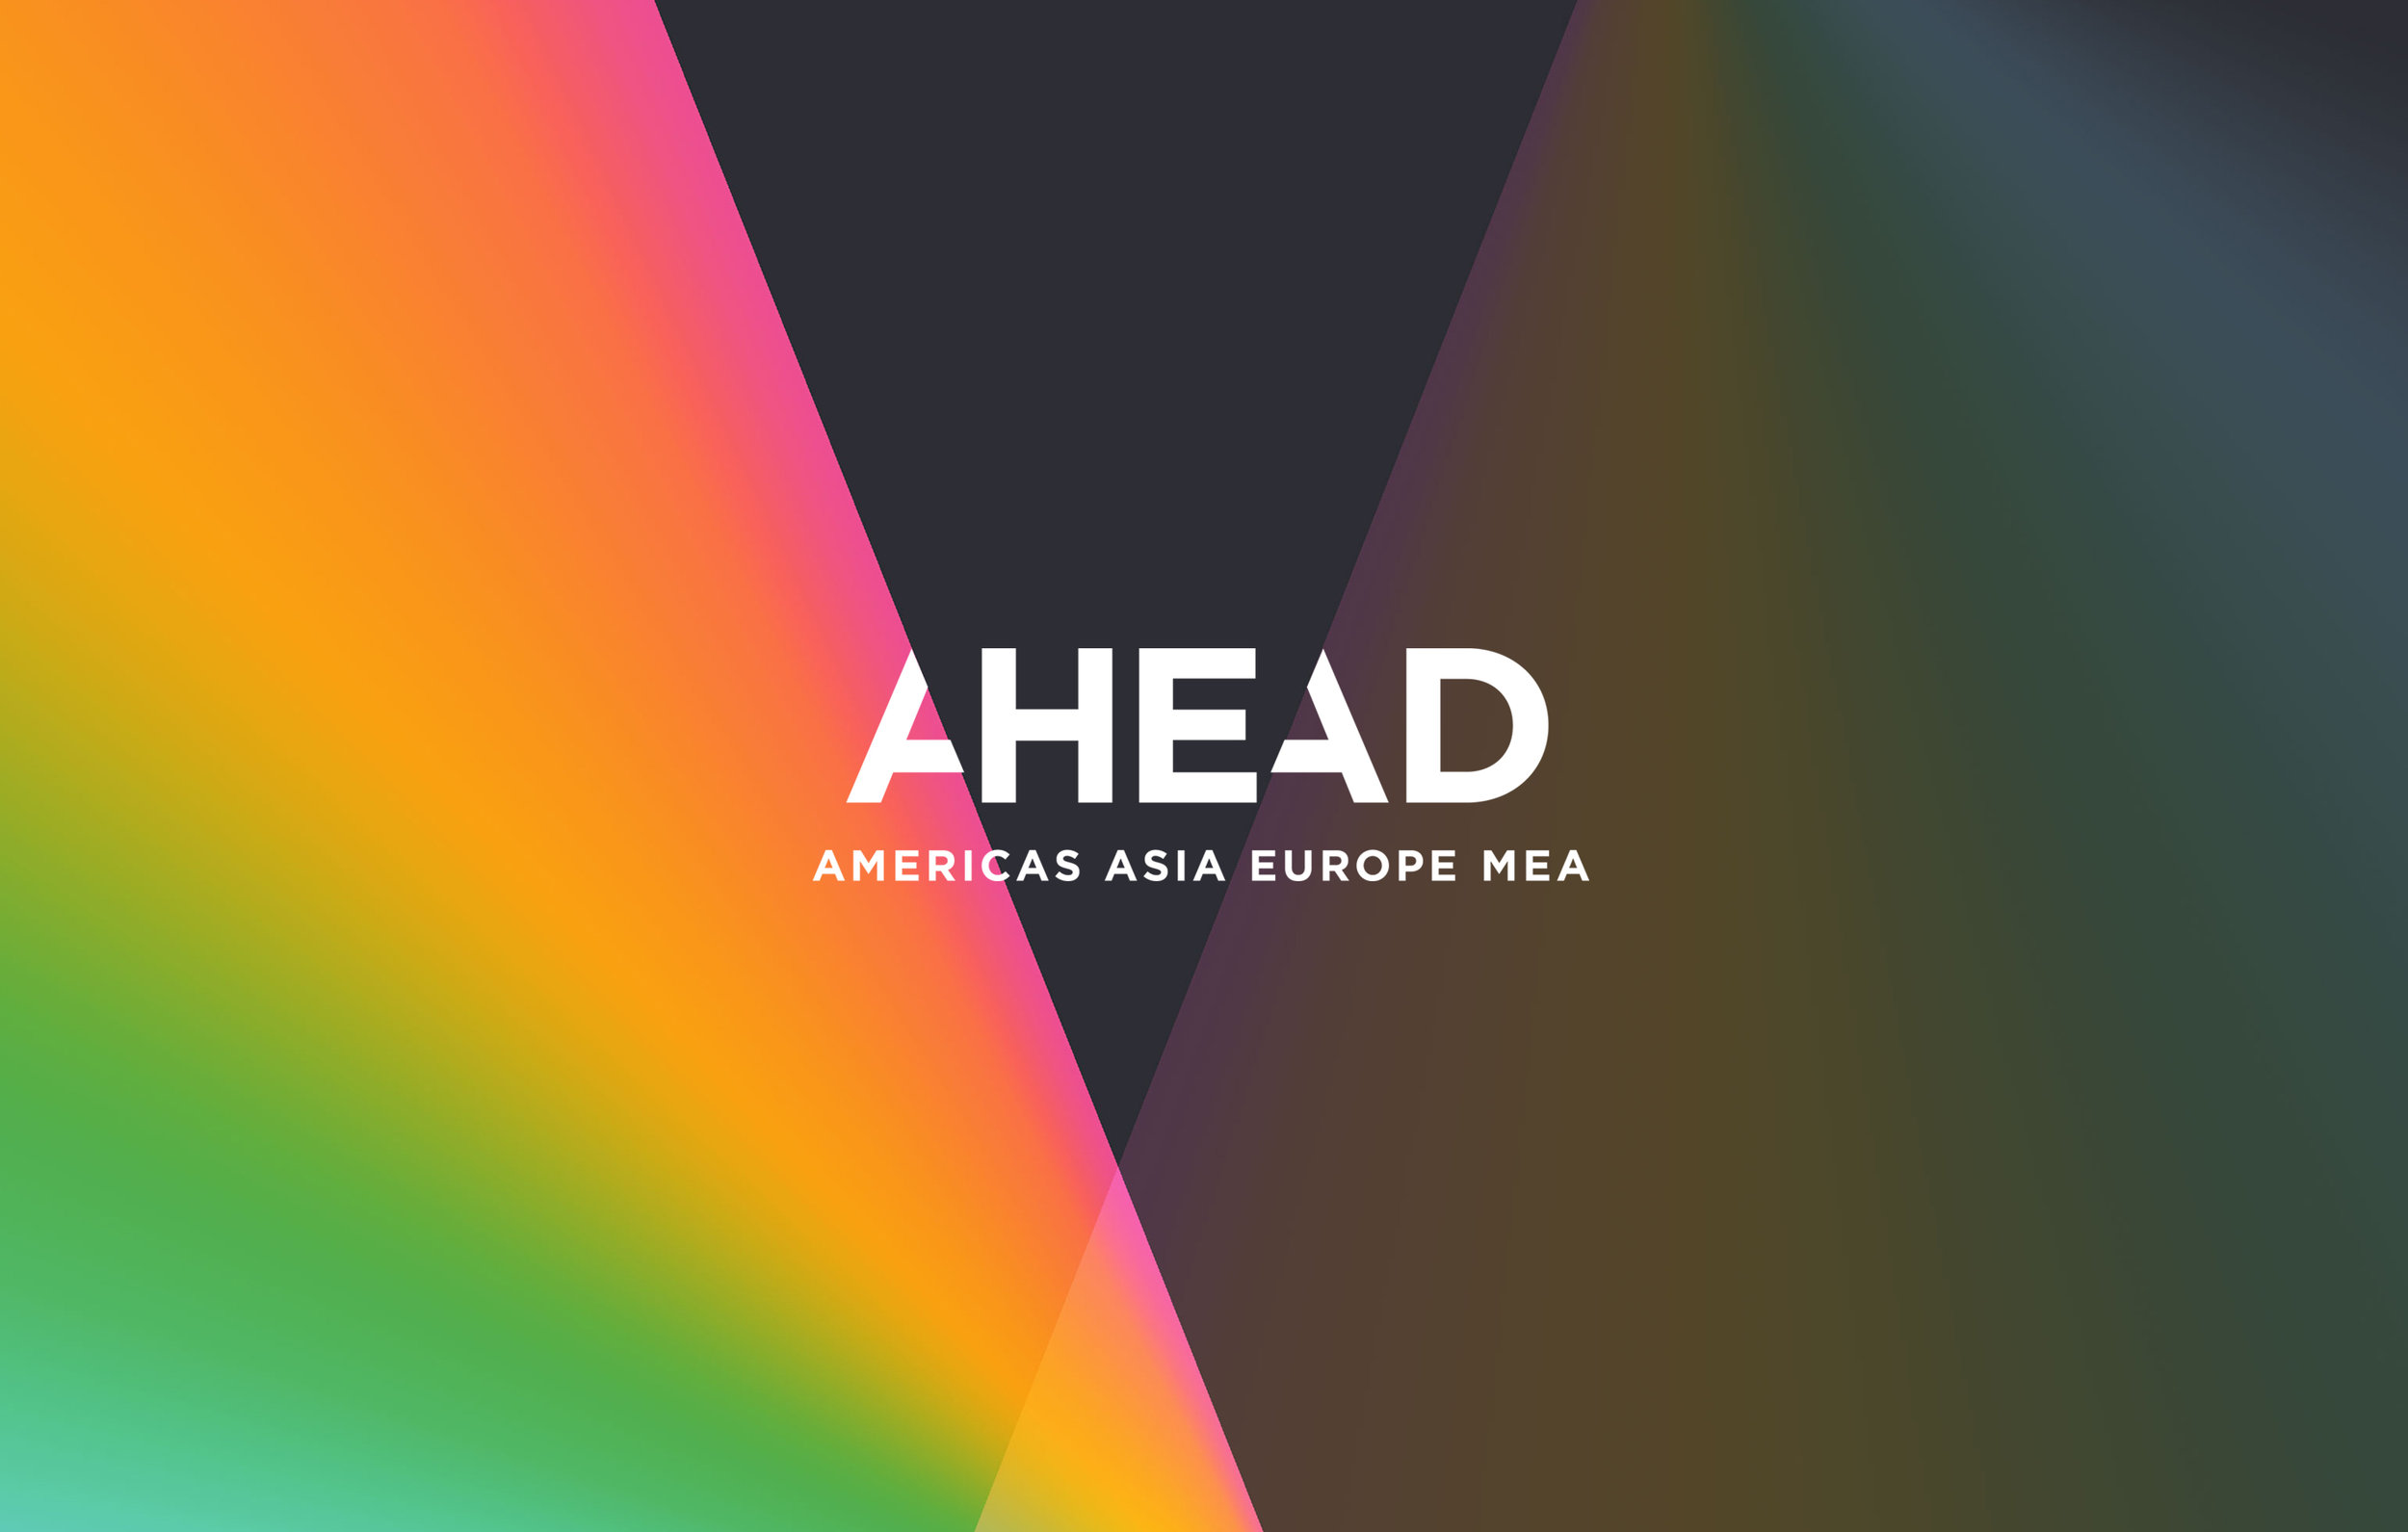 Ahead awards program logo with rainbow lighting effect over the image